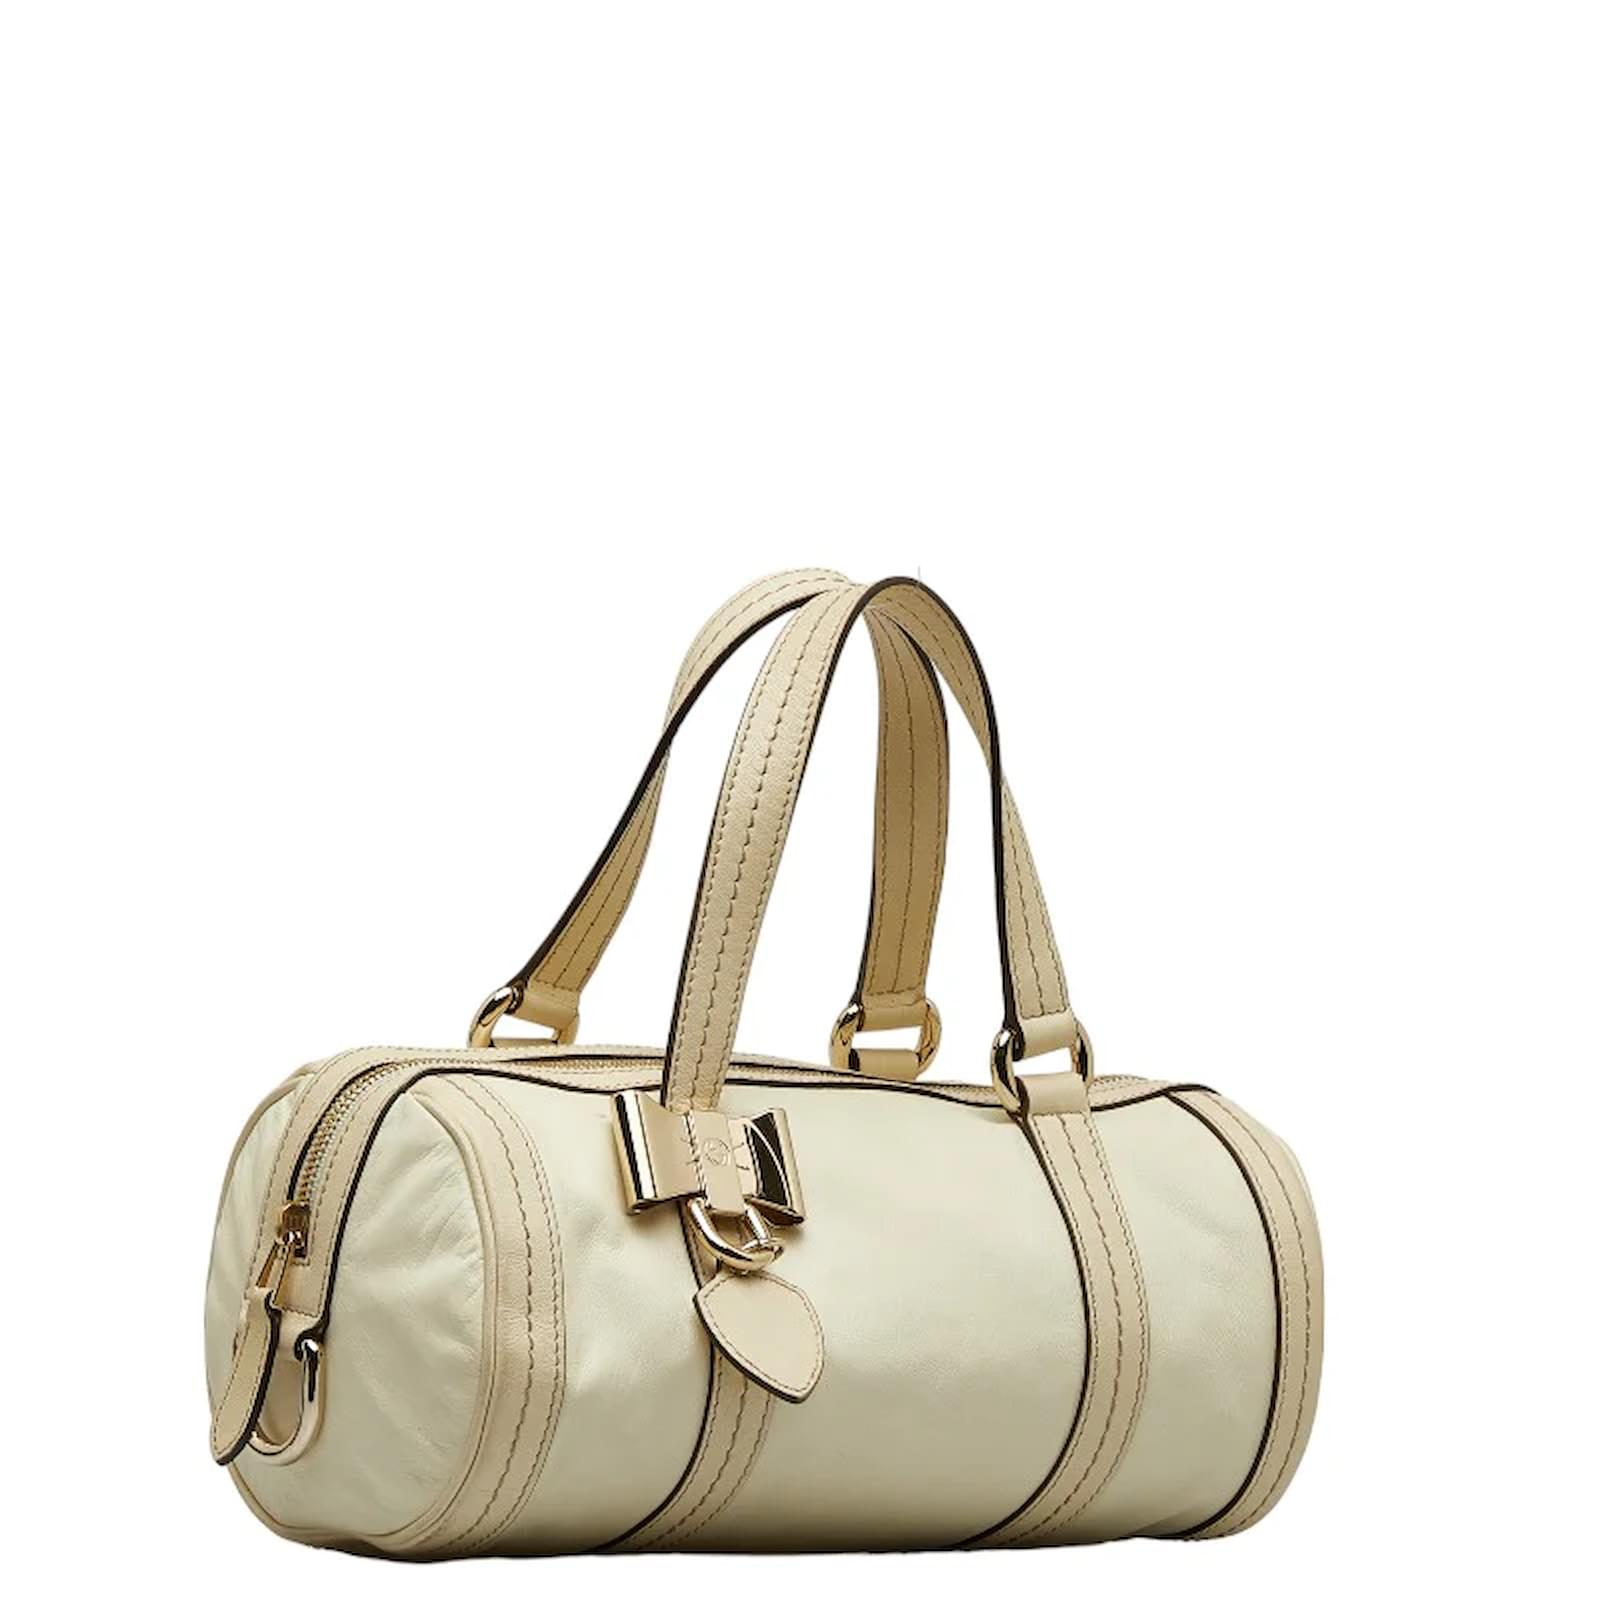 Gucci Leather Duchessa Boston Bag 181485 White Pony-style calfskin